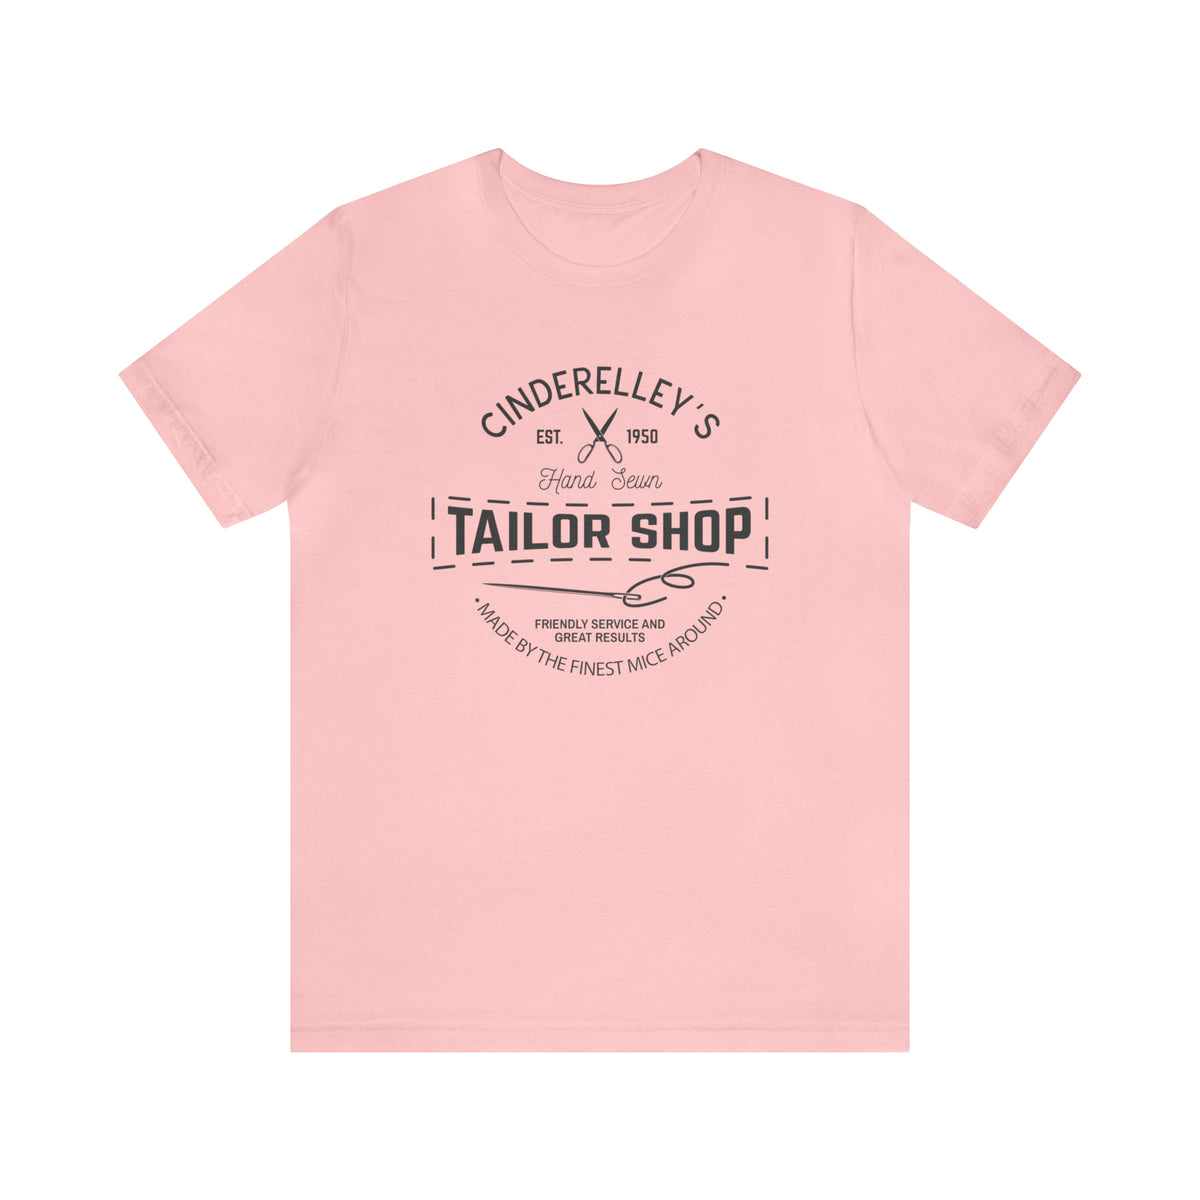 Cinderelley’s Tailor Shop Canvas Unisex Jersey Short Sleeve Tee